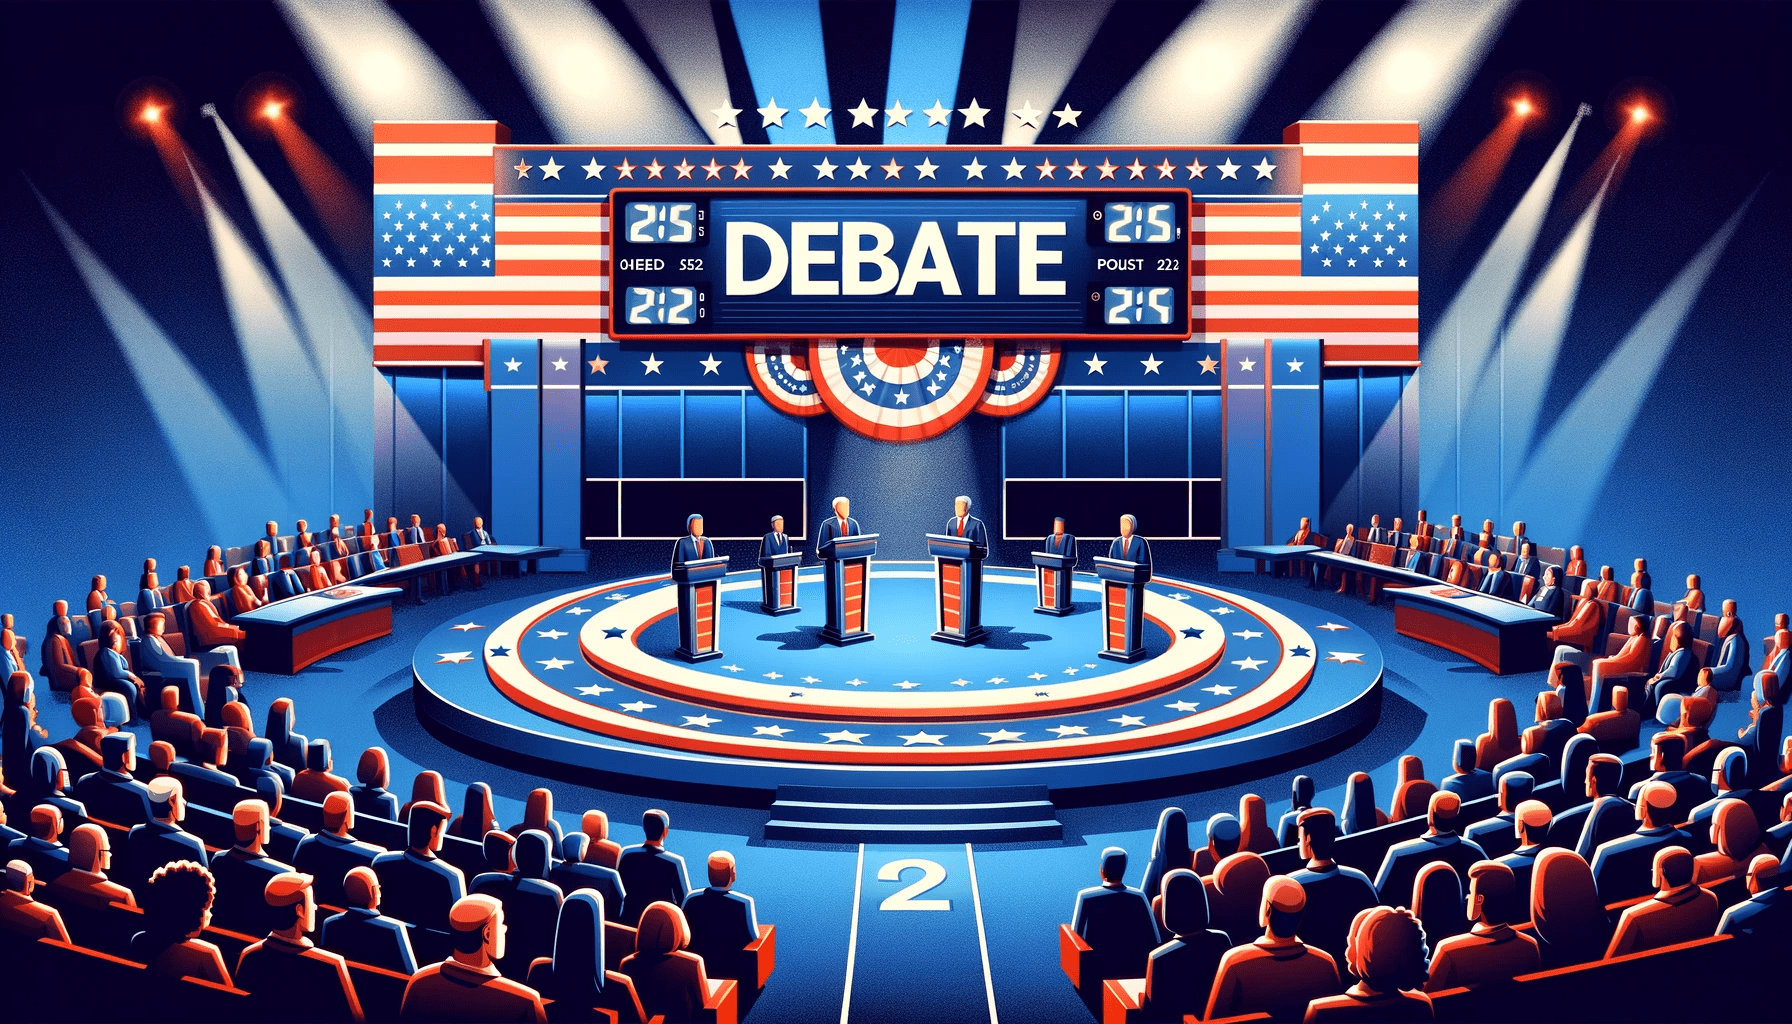 Presidential Debate News Graphic or Debate Graphic in general